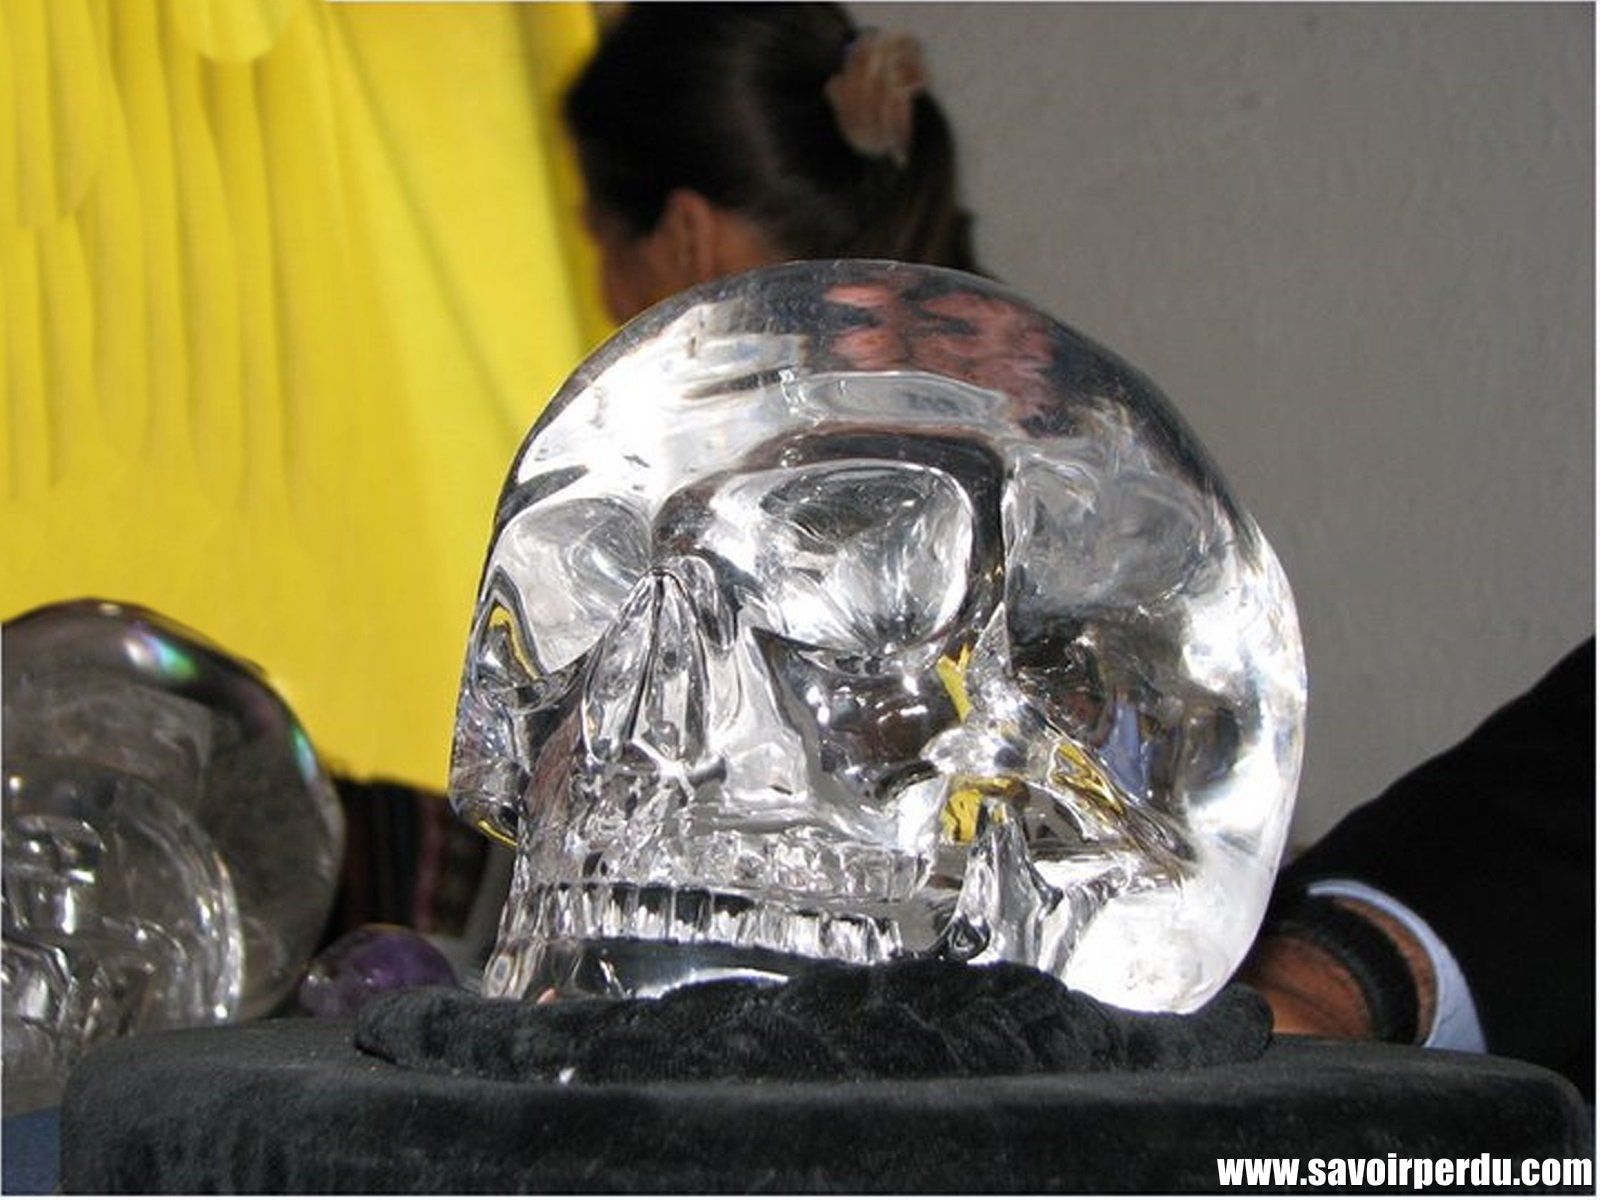 Crâne de Cristal, Crystal Skull, Patrice Marty